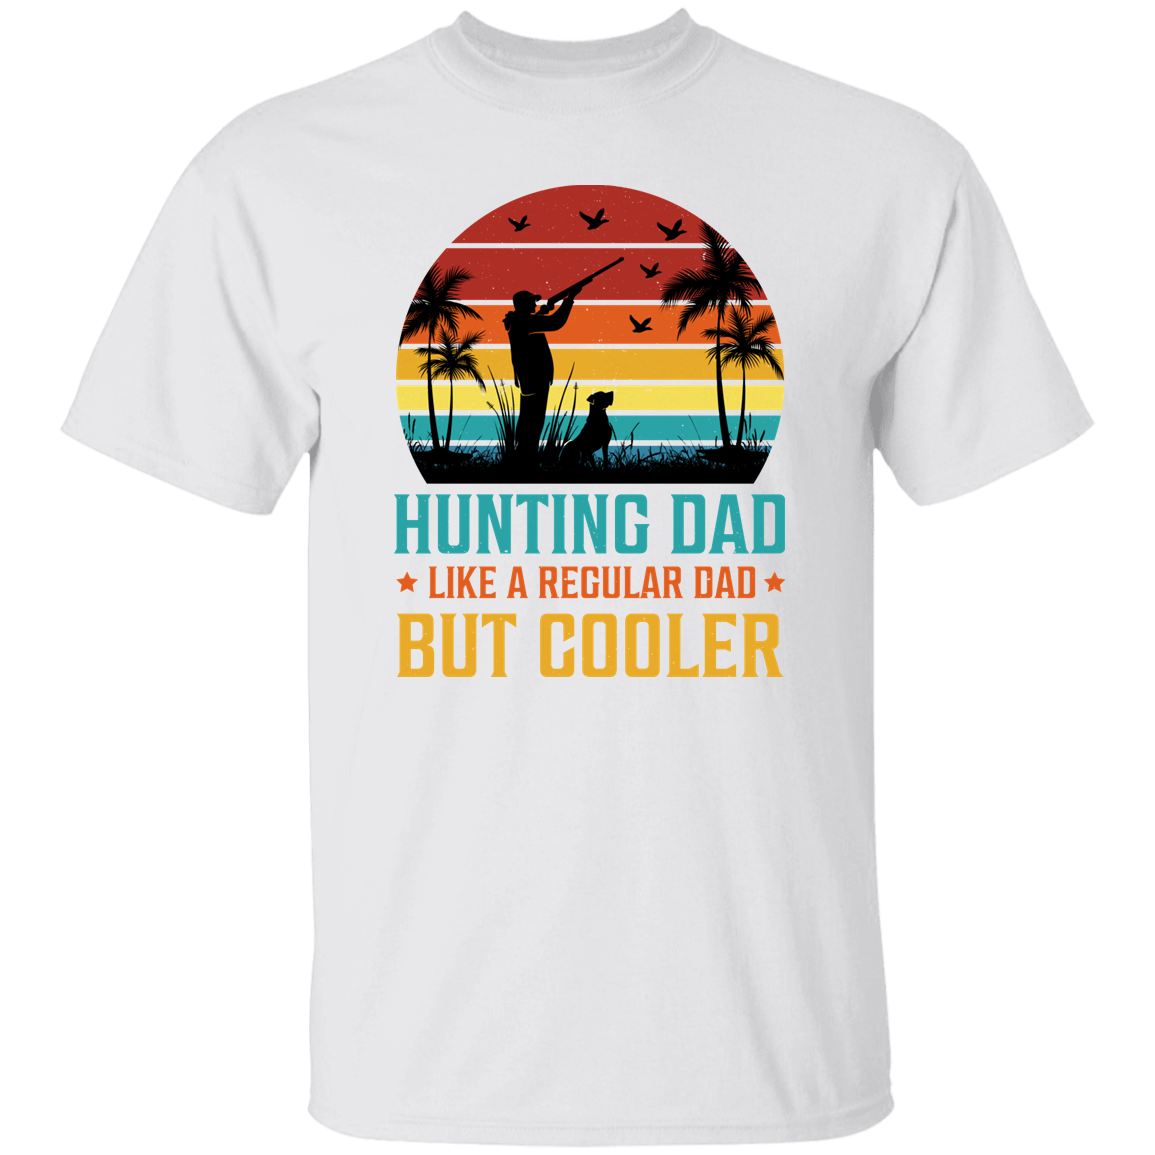 Hunting Dad Only Cooler Shirt - G500 5.3 oz. T-Shirt